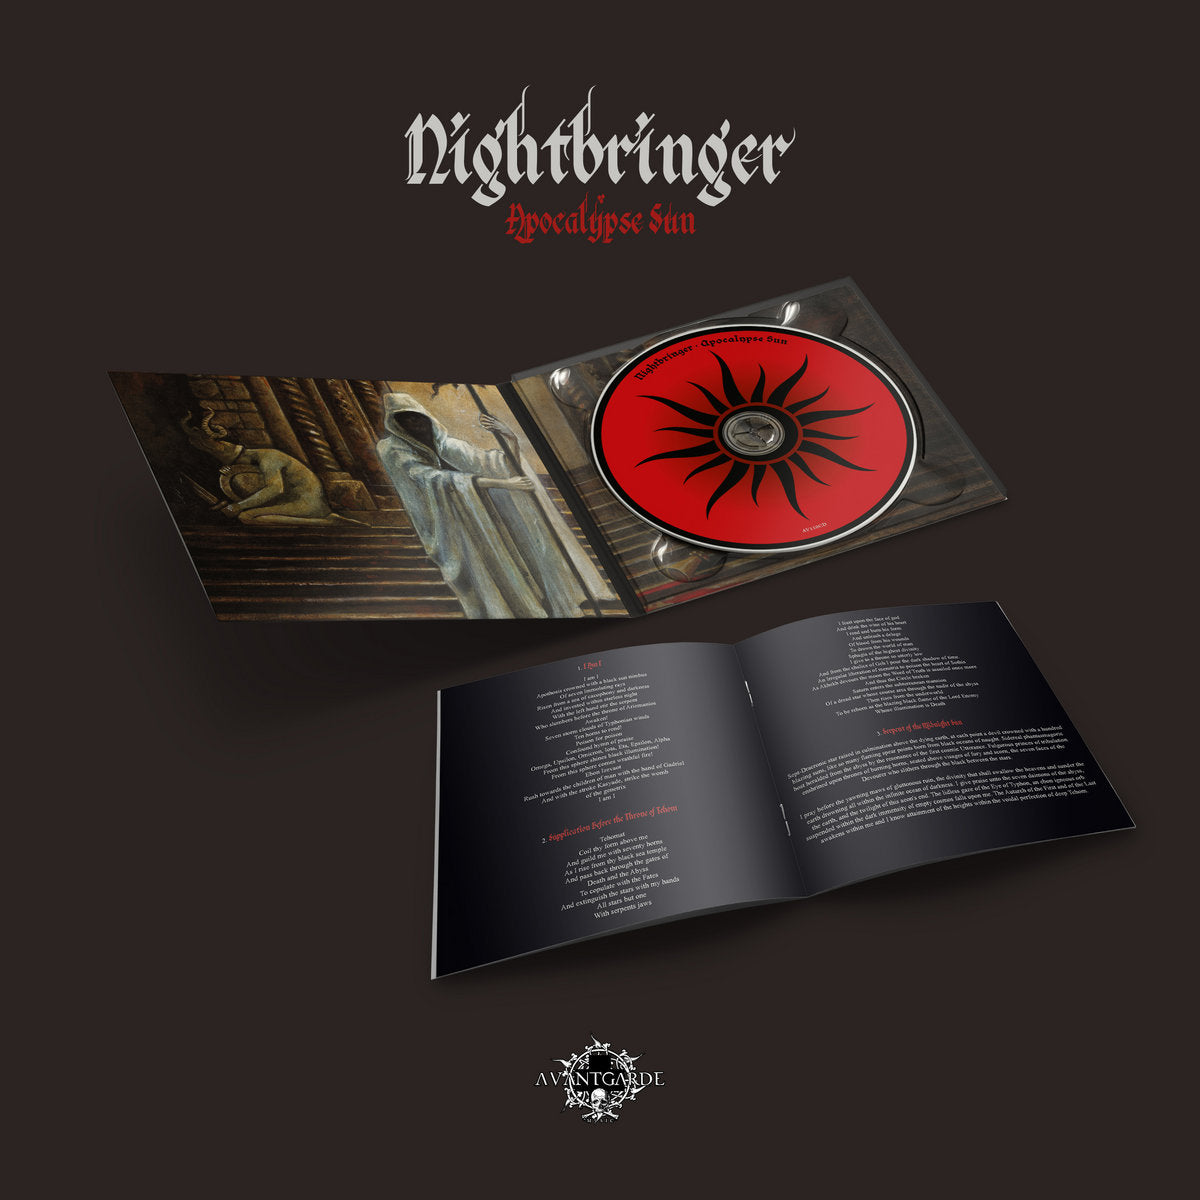 [SOLD OUT] NIGHTBRINGER "Apocalypse Sun" CD (digipak)